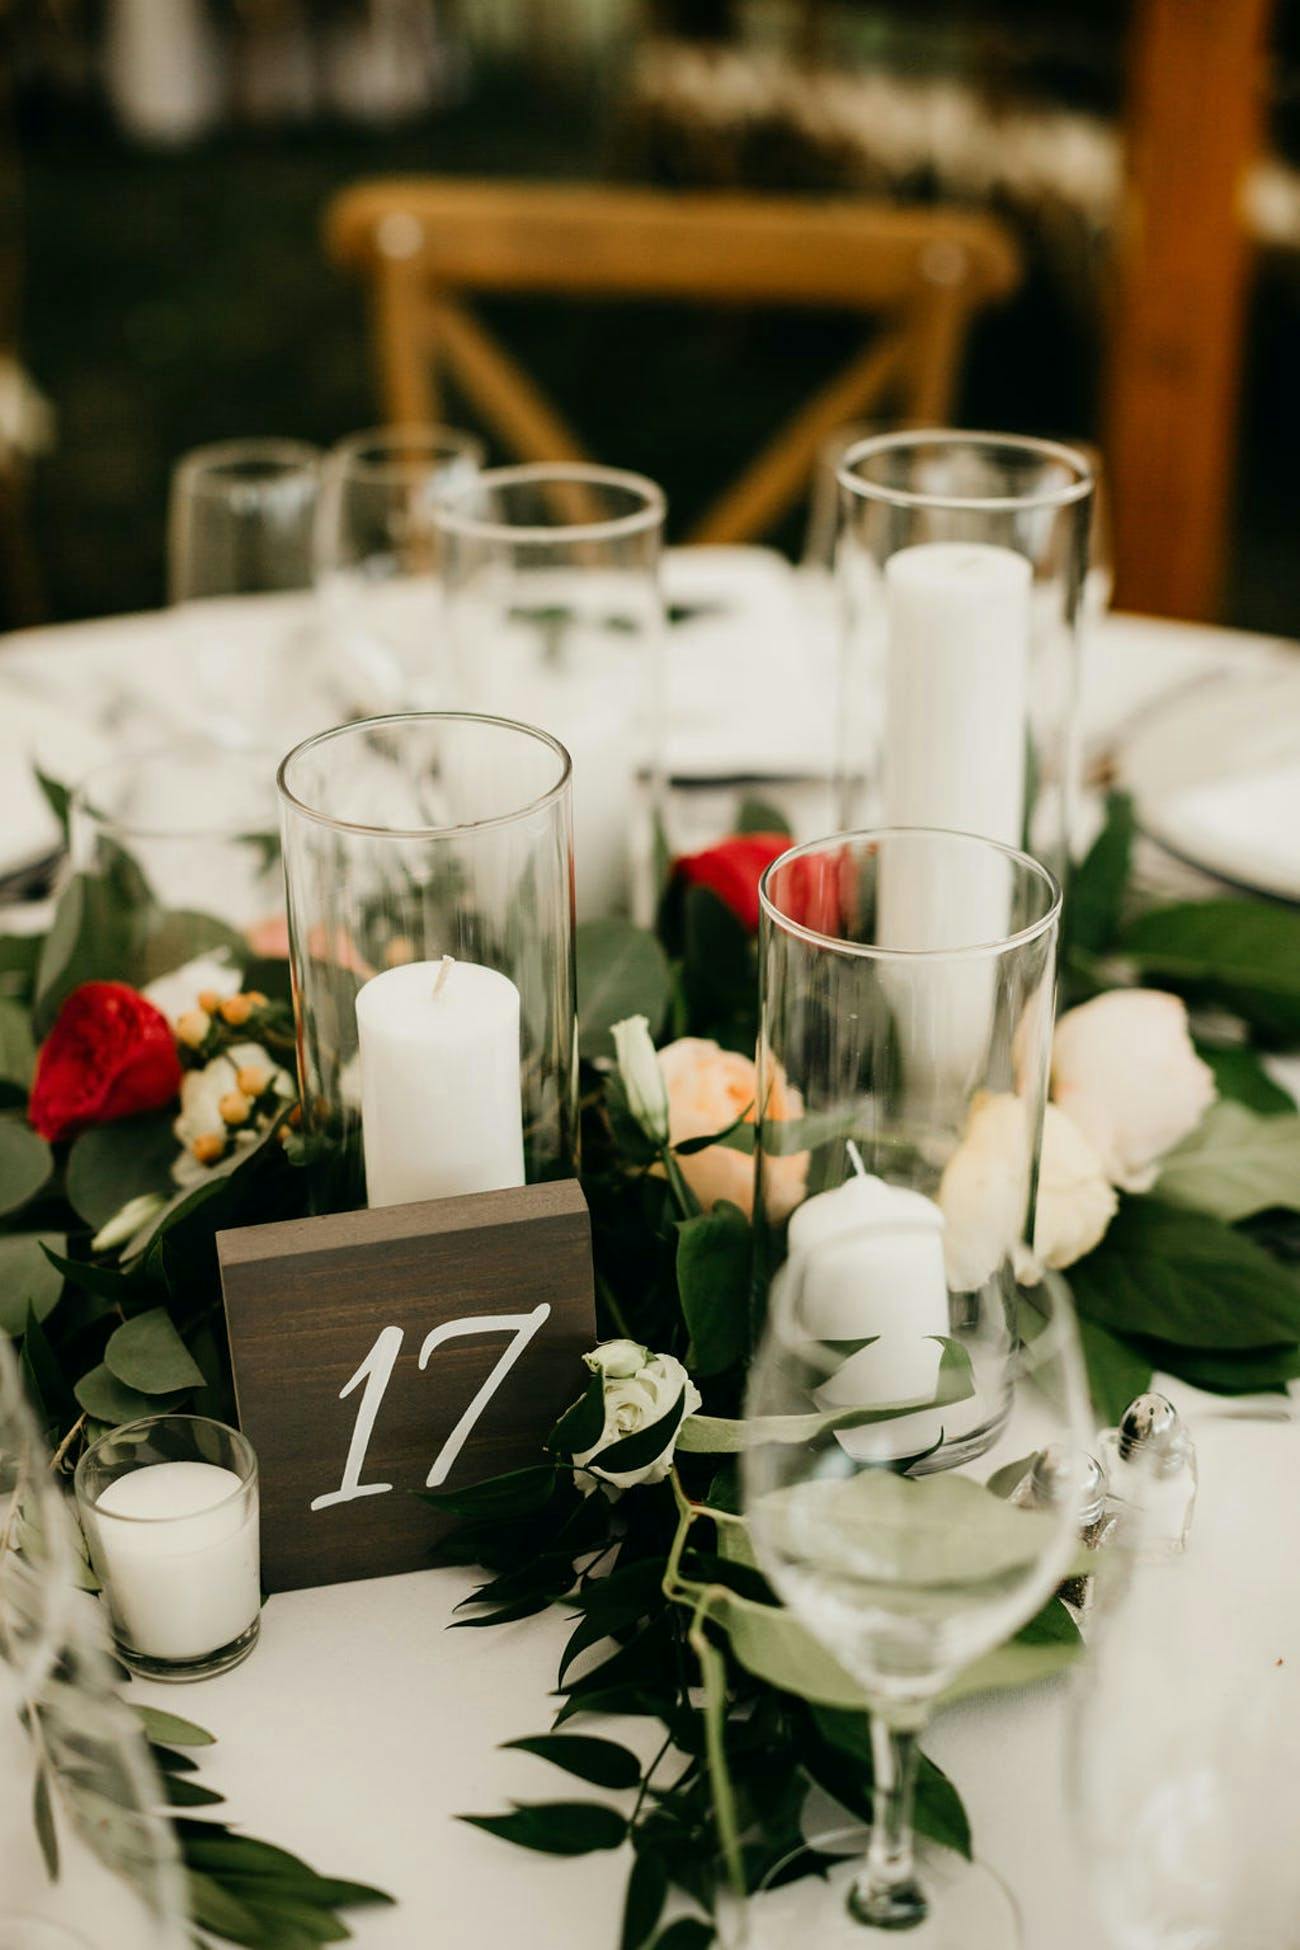 Rustic wedding table numbers.